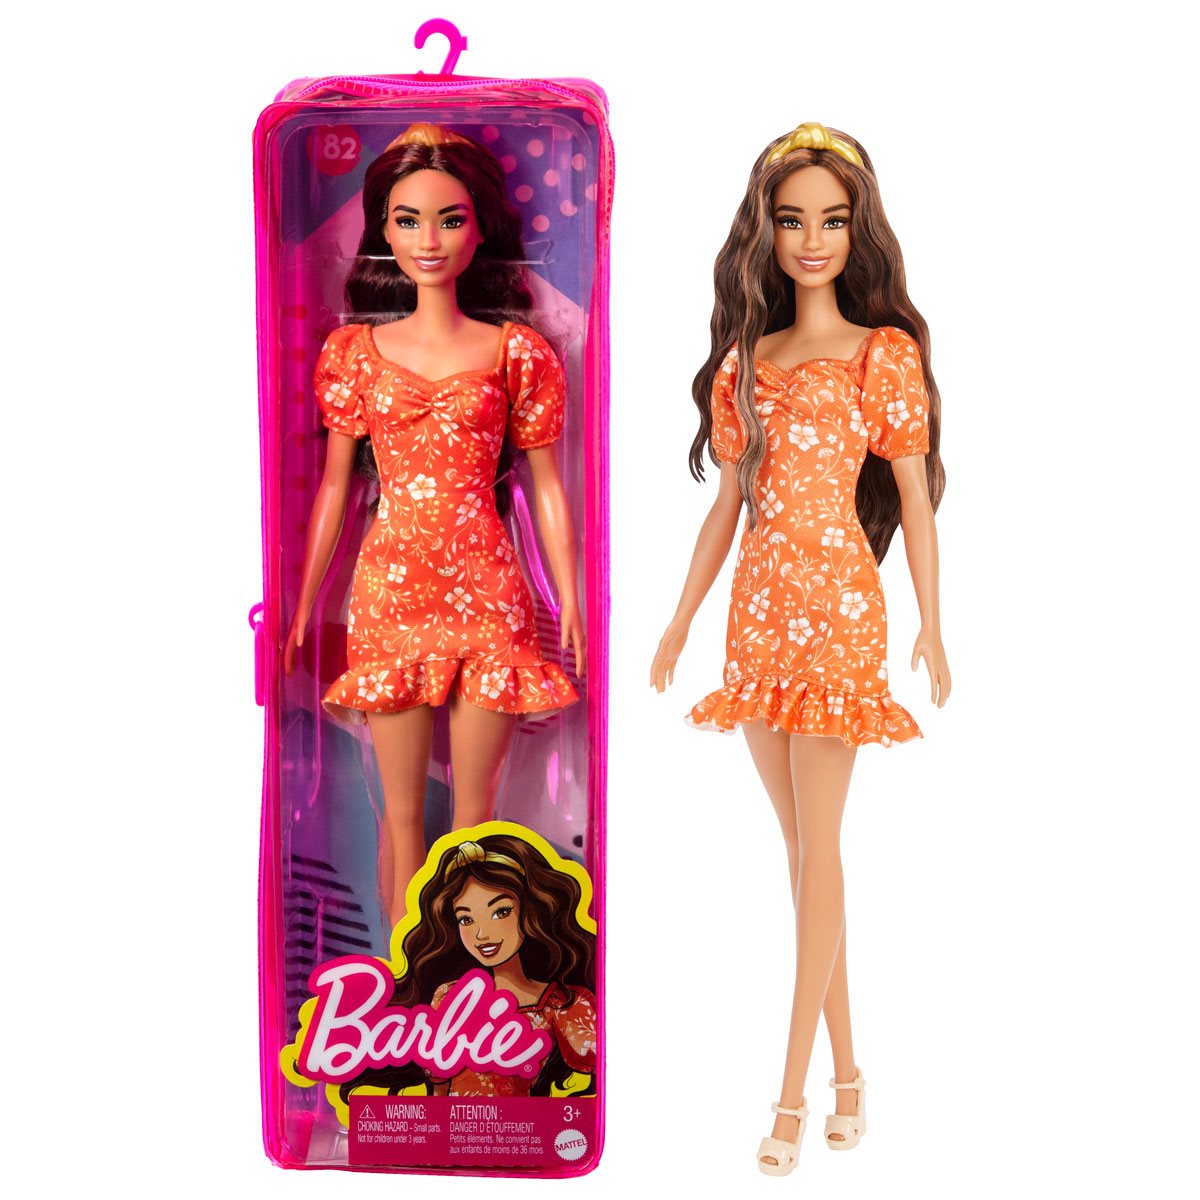 Barbie Fashionista Doll Case - Entertainment Earth